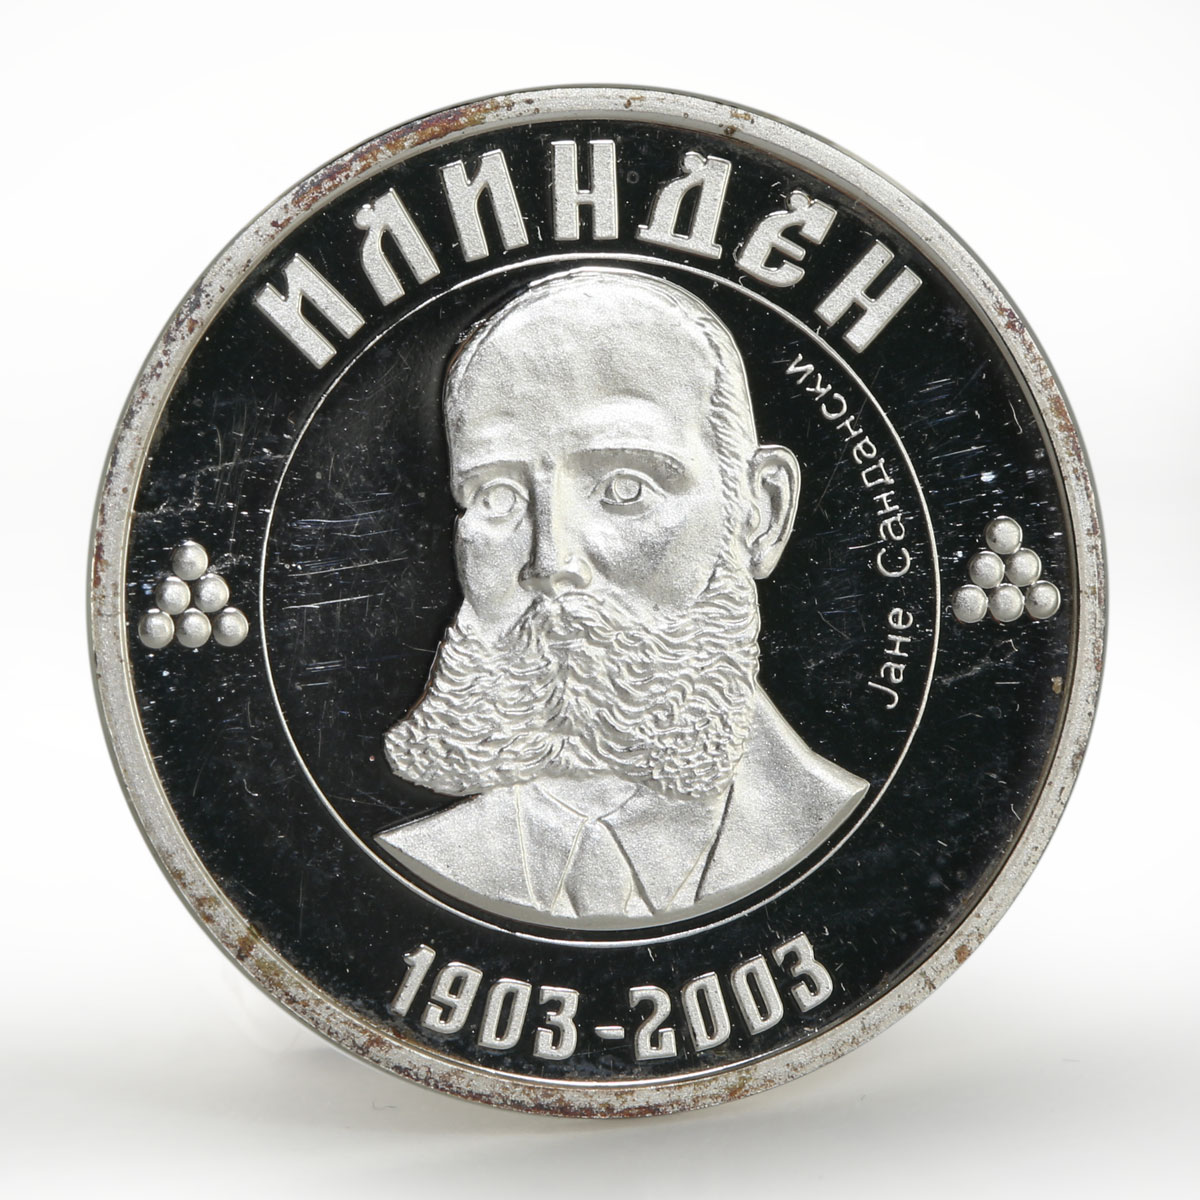 Macedonia 100 denari Yane Sandanski revolutionary proof silver coin 2003